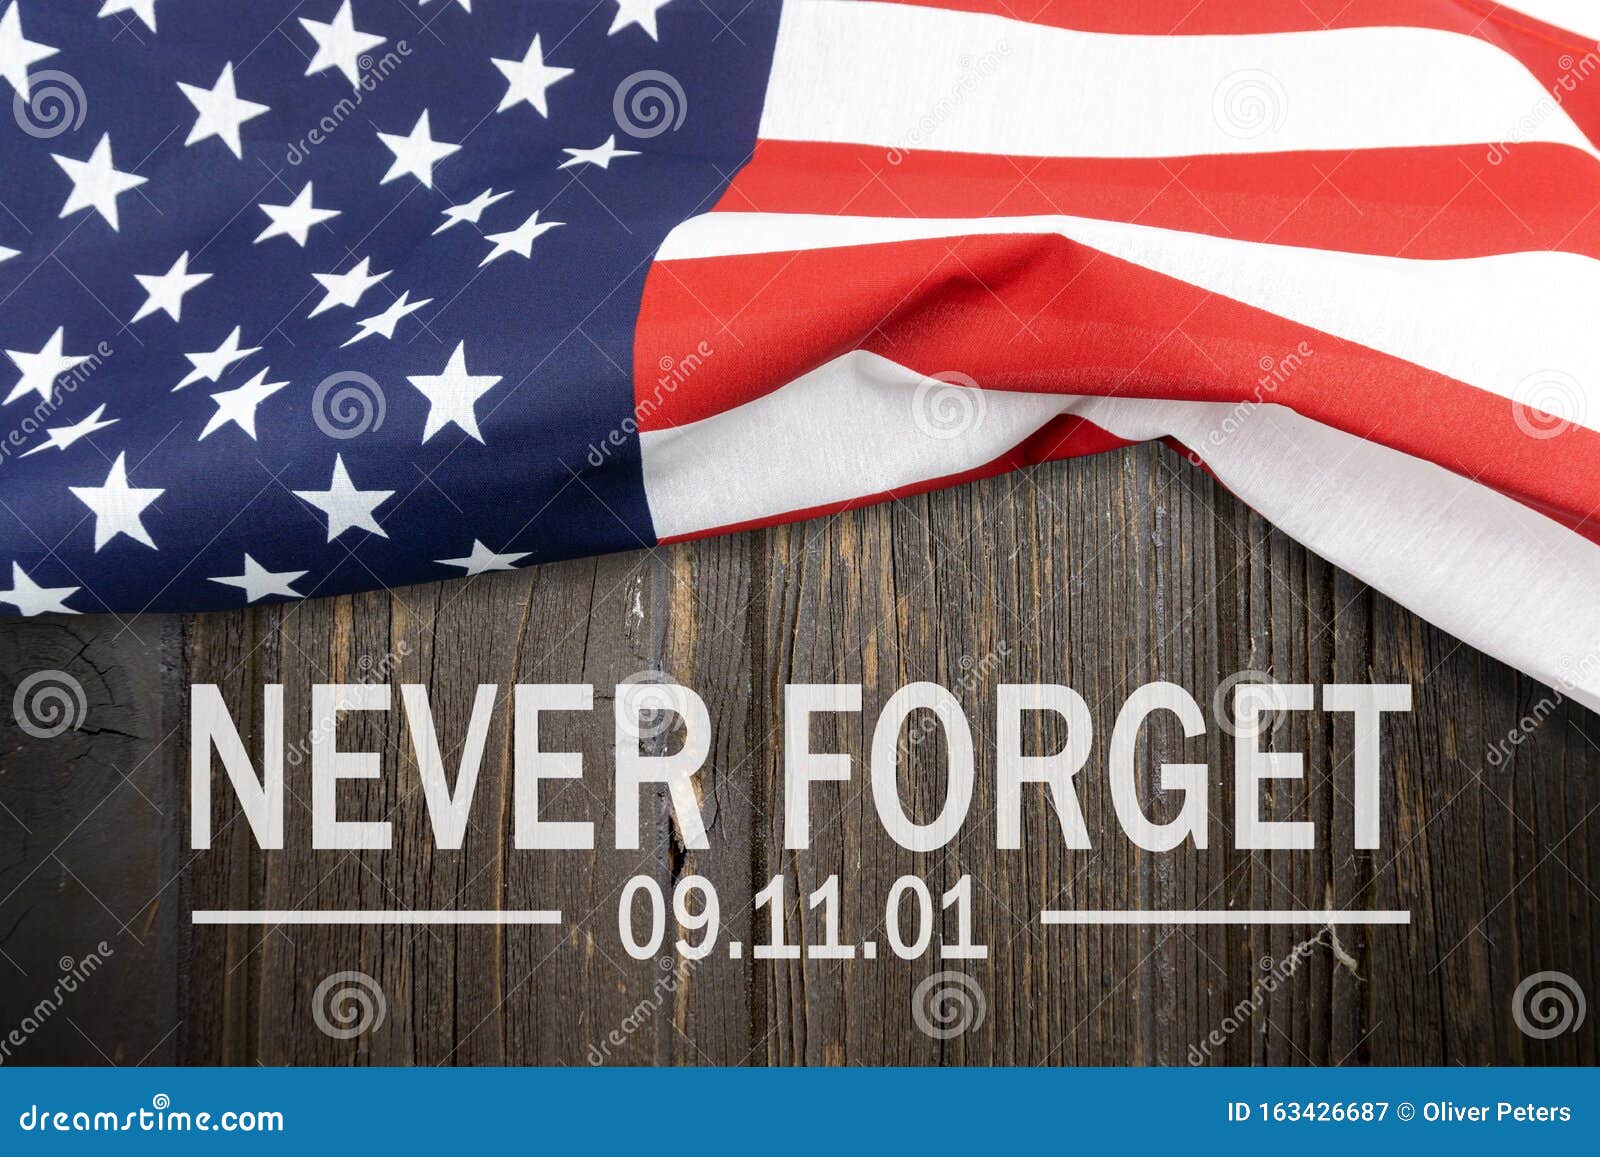 9/11 patriot day, september 11. `never forget`